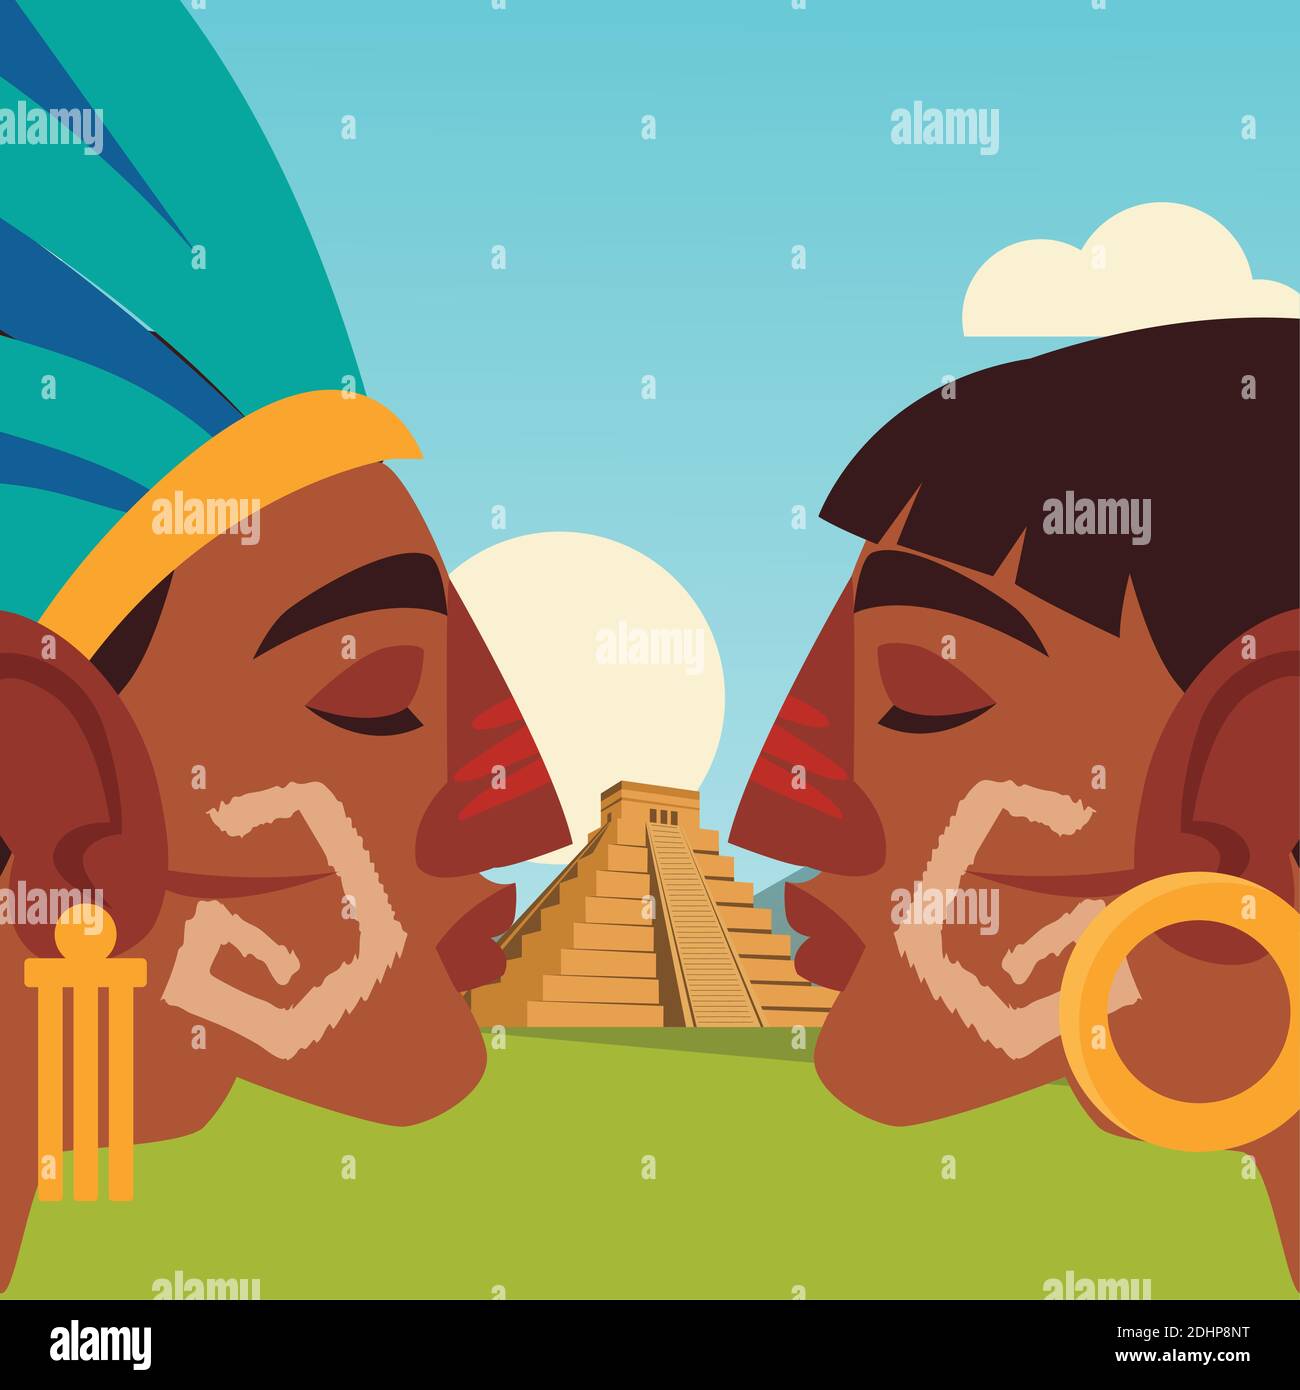 aztec warrior and pyramid in outdoor scene vector illustration Stock Vector